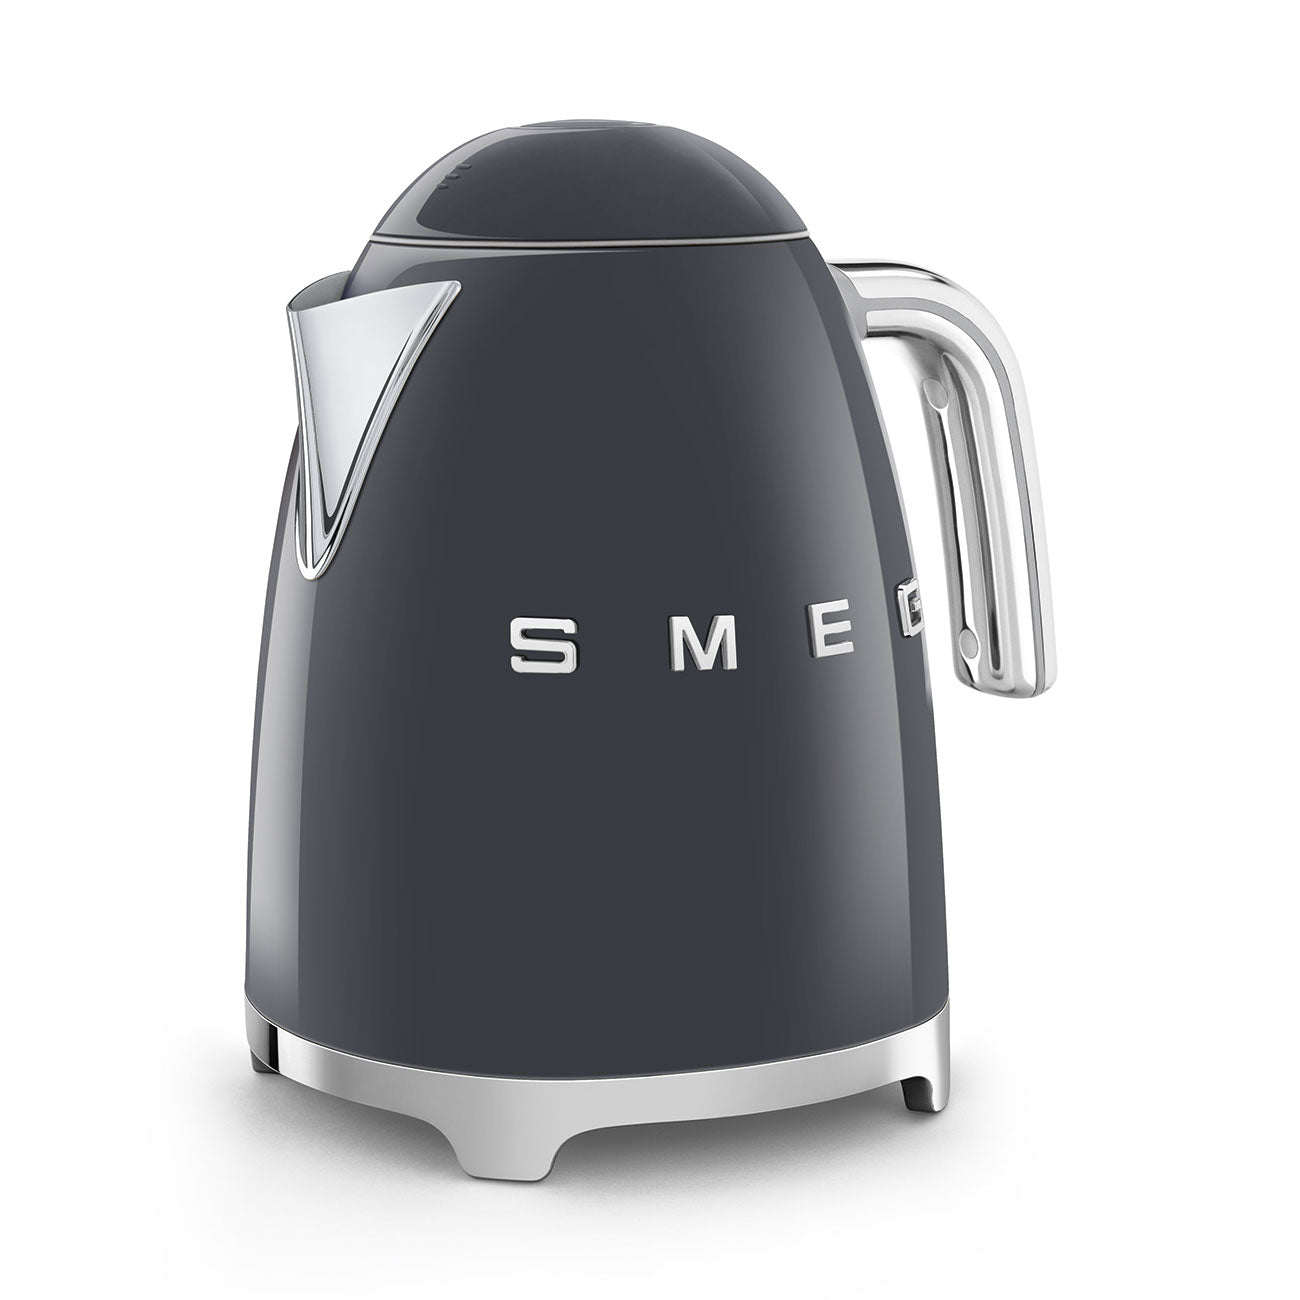 Smeg electric kettle non-slip base, water level indicator, 1.7 L